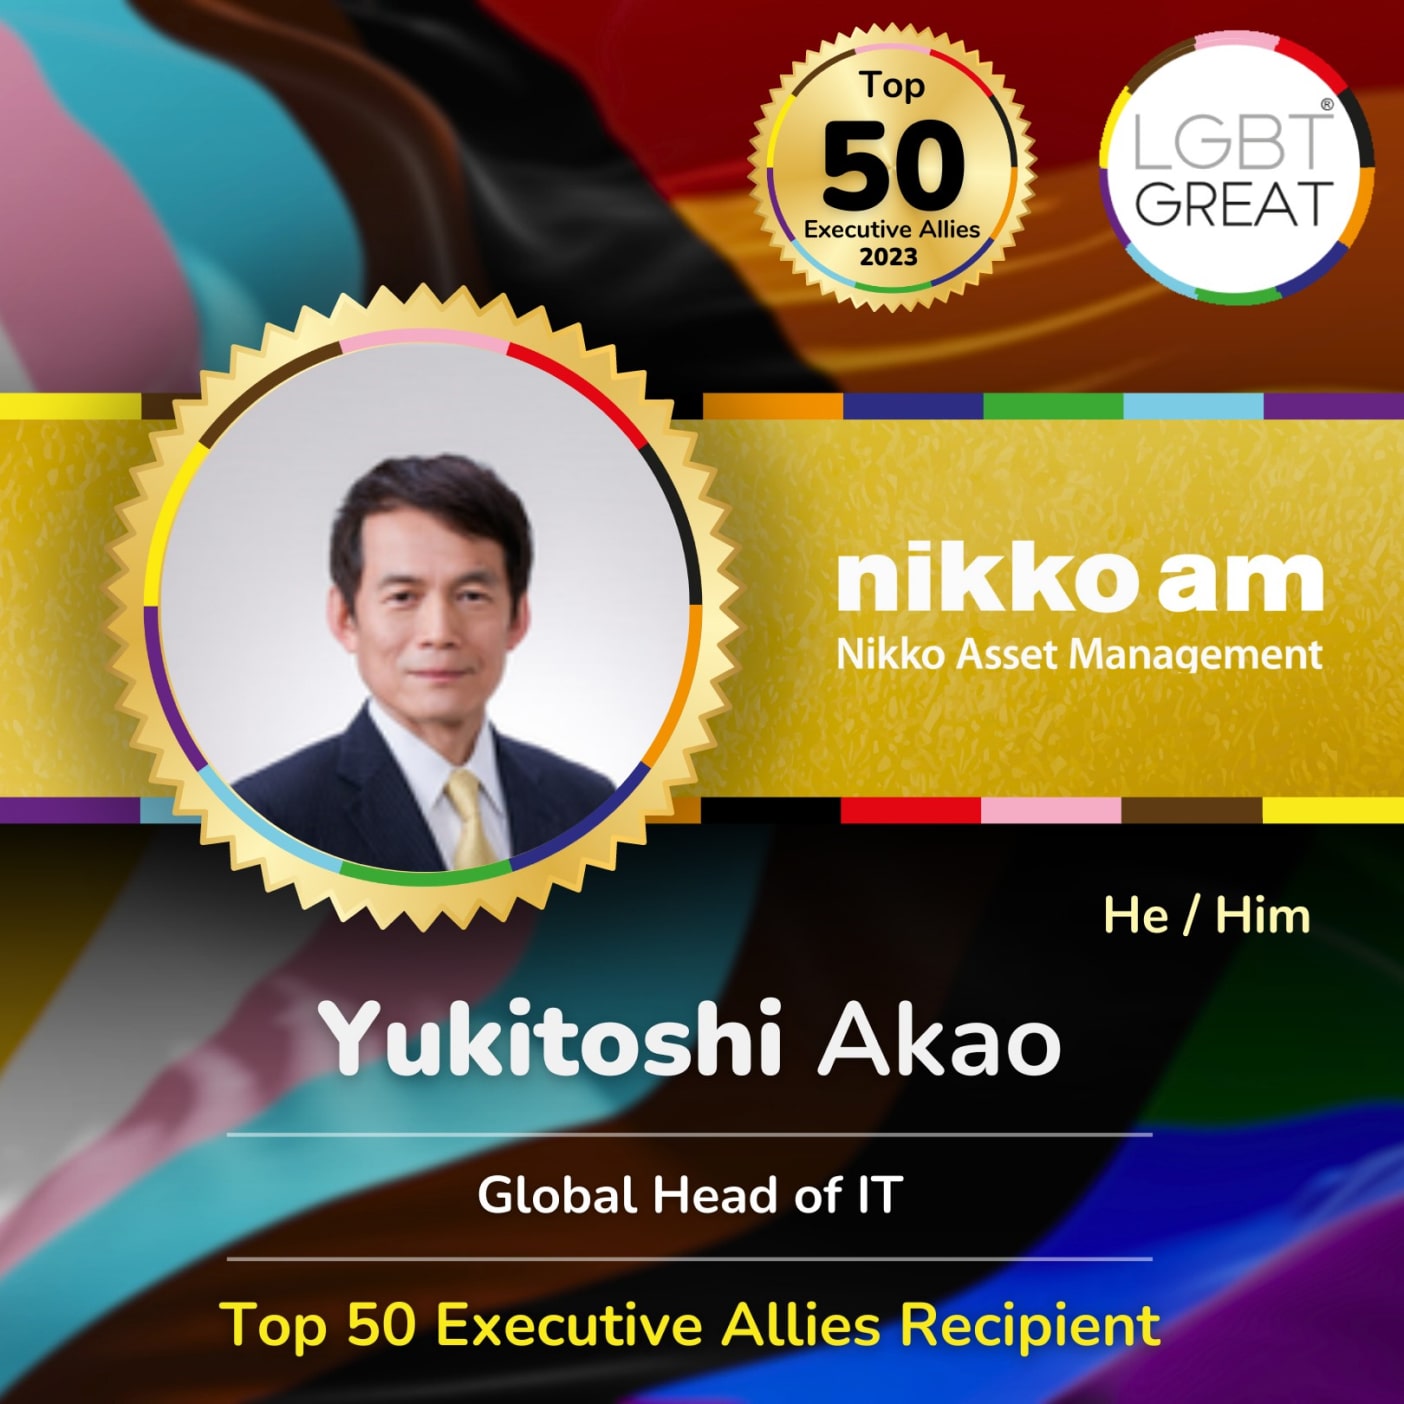 Yukitoshi Akao Top 50 Executive Ally